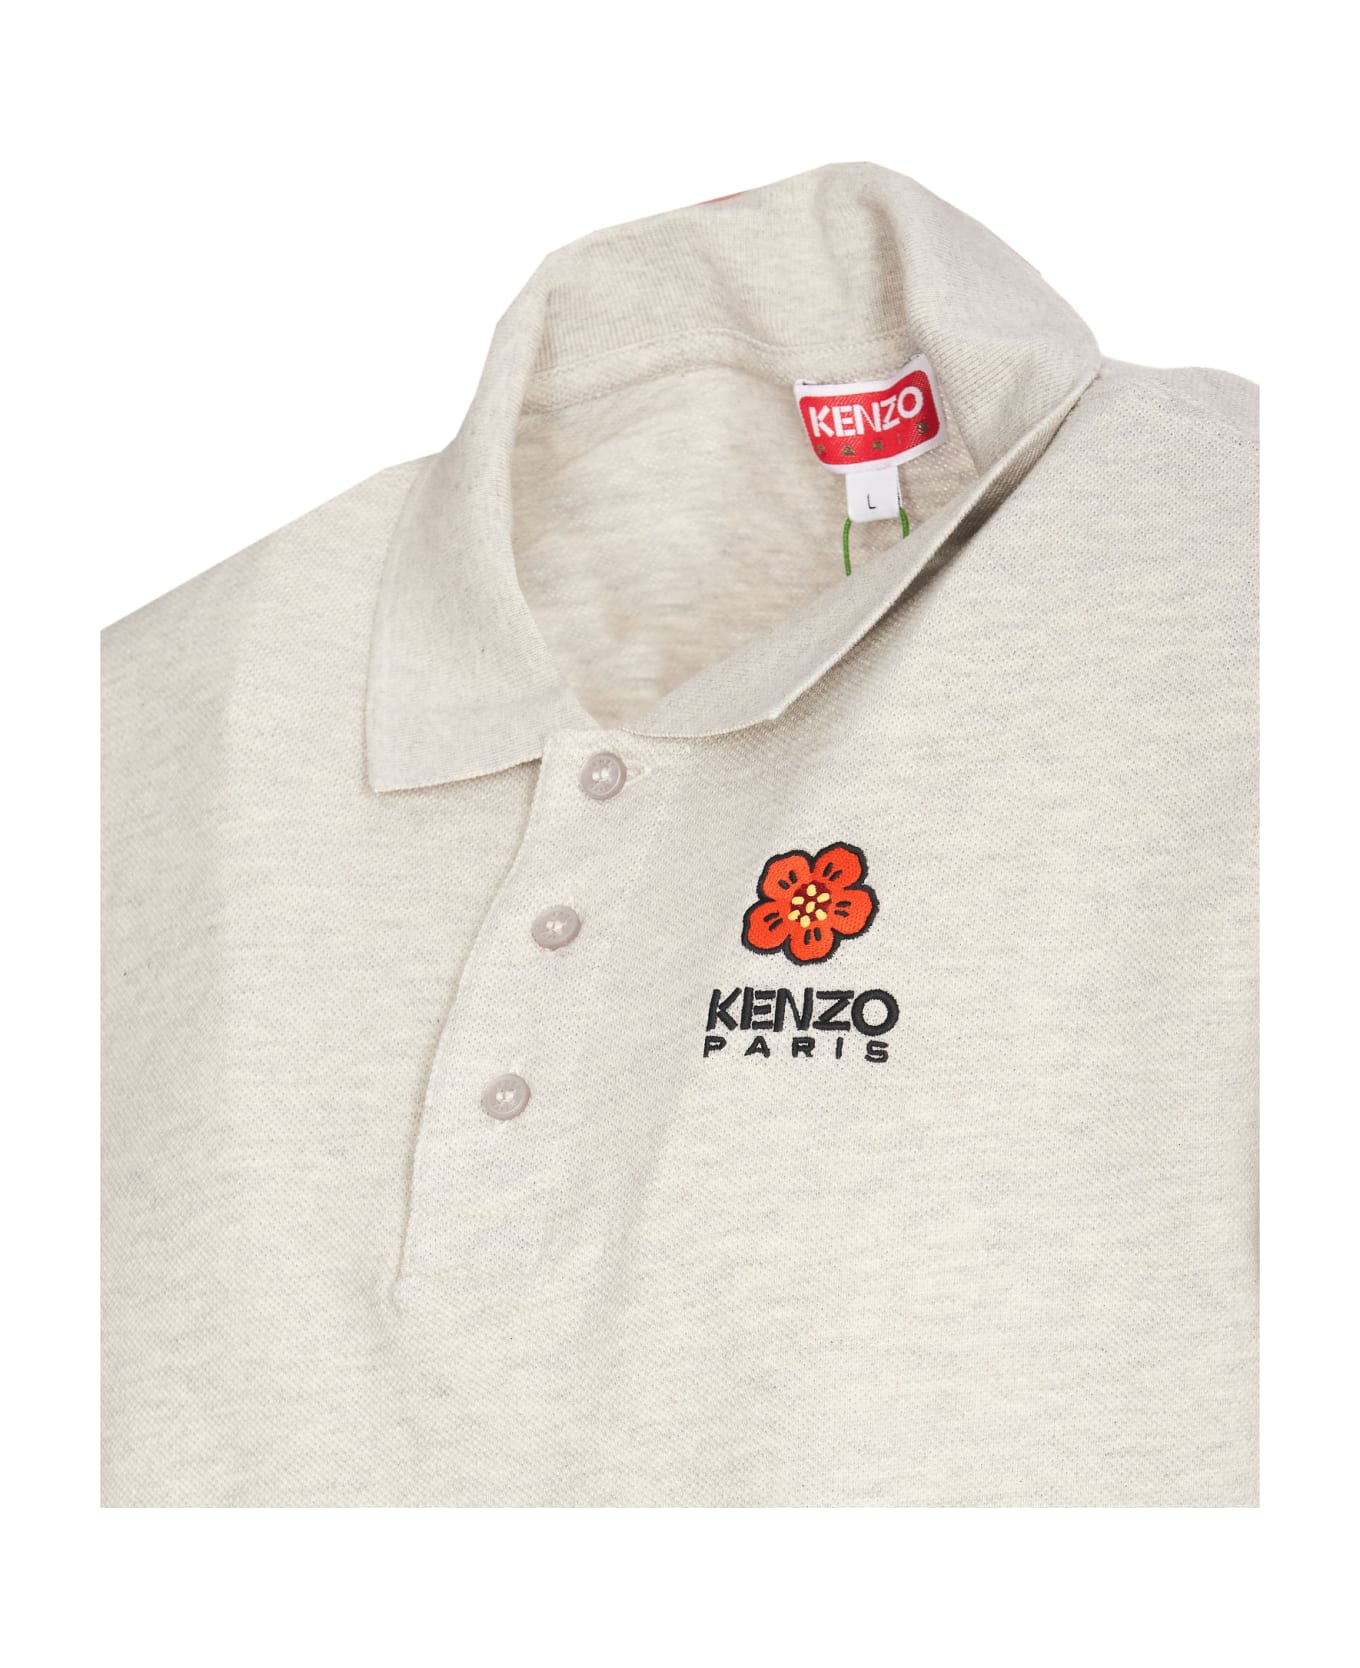 Kenzo Boke Flower Crest Polo Shirt - Grey